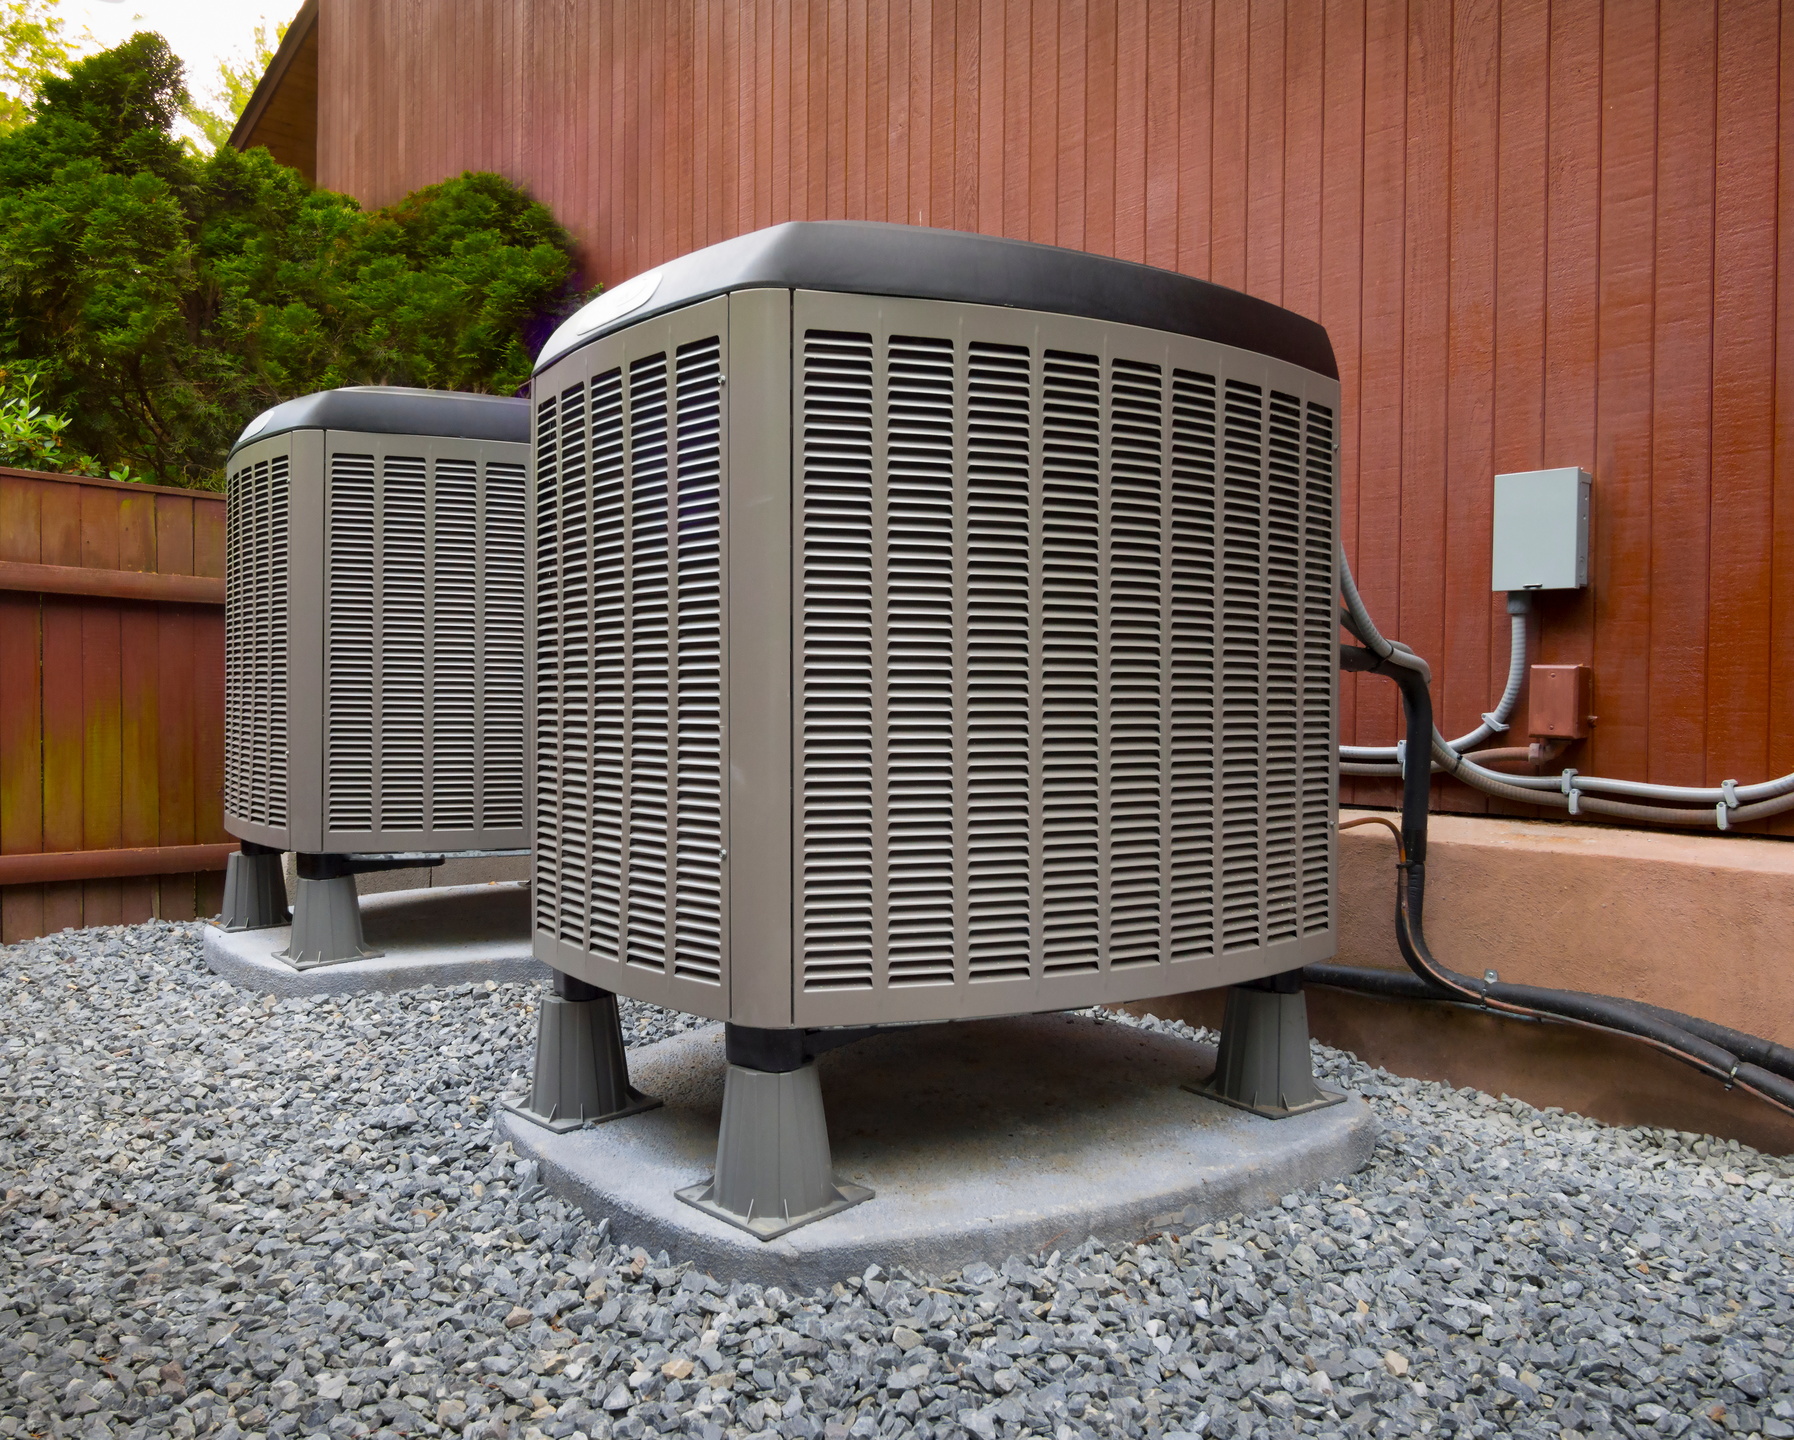 Air Conditioning Installation In Irvine Ca